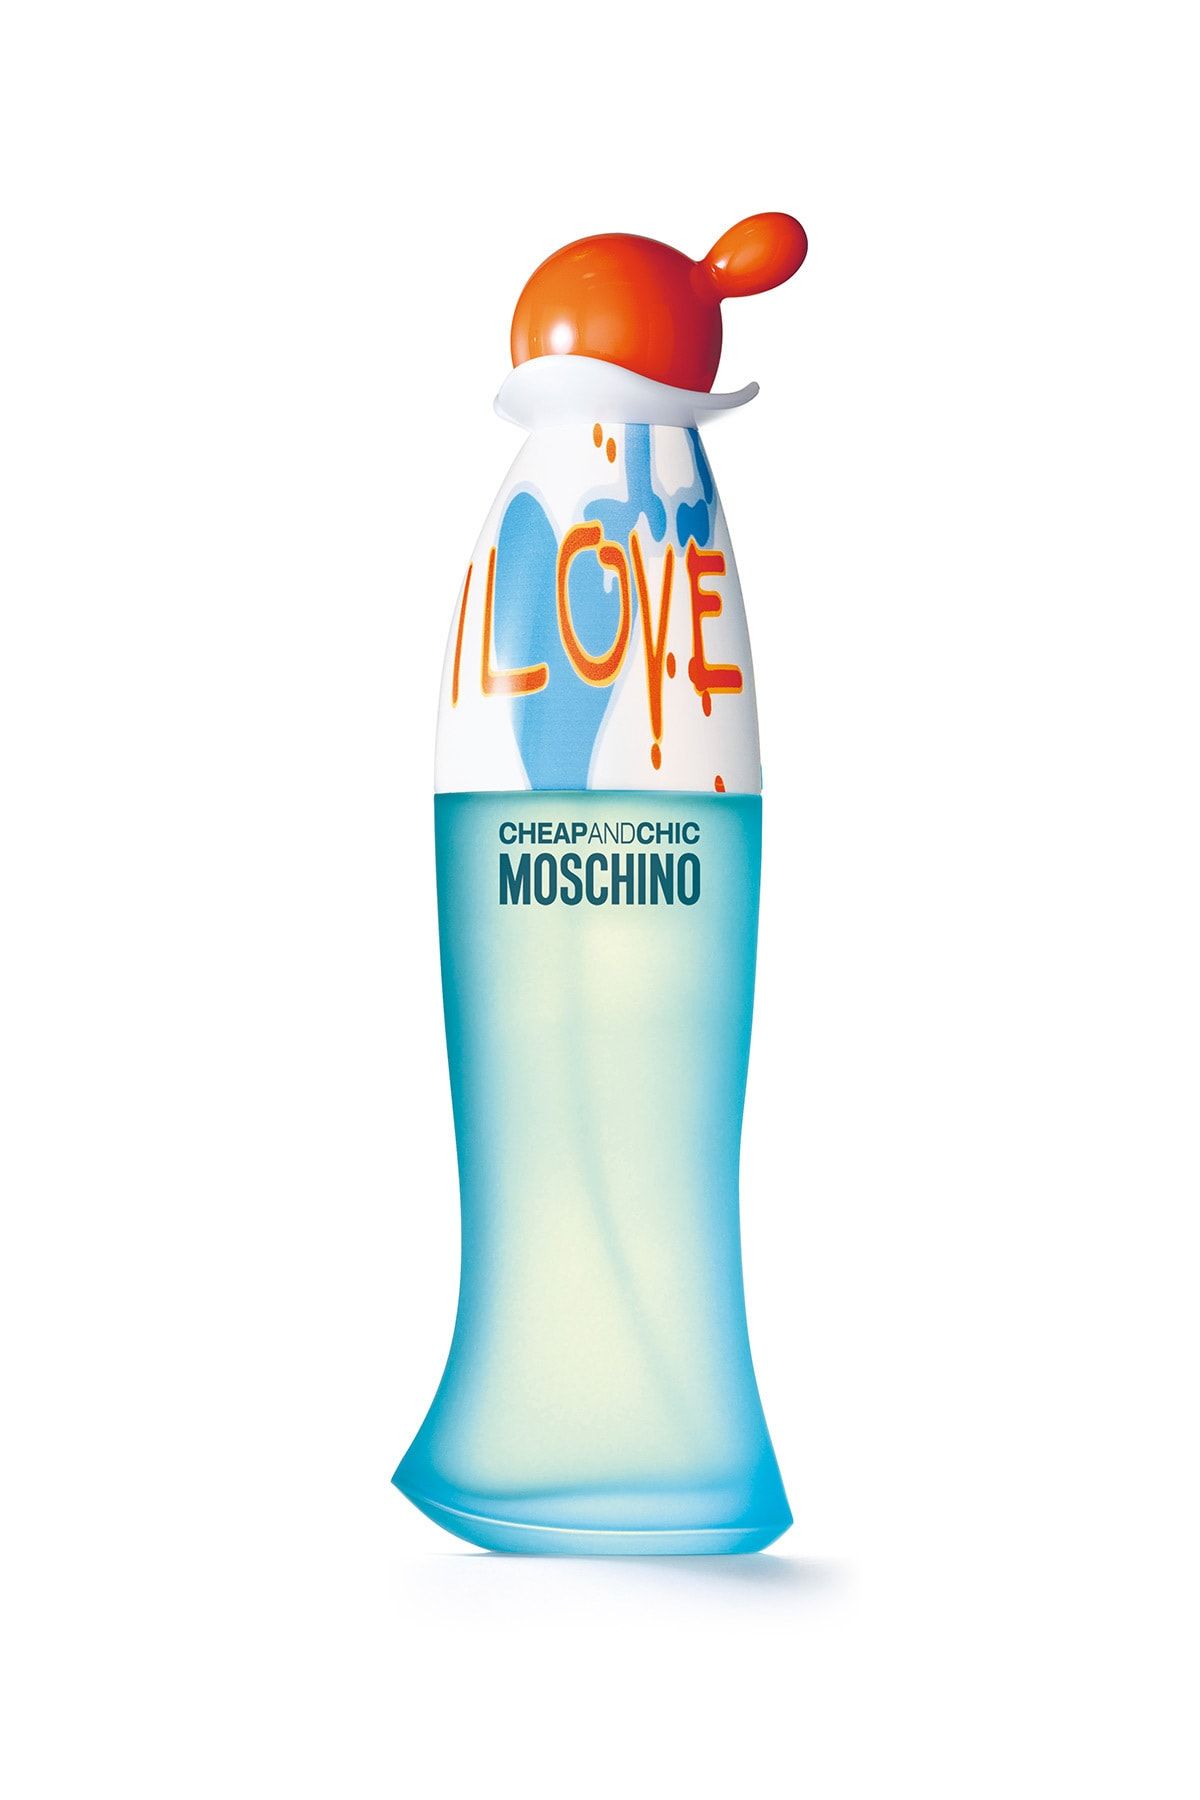 Туалетная вода Moschino i Love Love. Cheap & Chic i Love Love Moschino. Moschino i Love Love 100 ml. Moschino cheap & Chic i Love Love EDT, 100 ml.